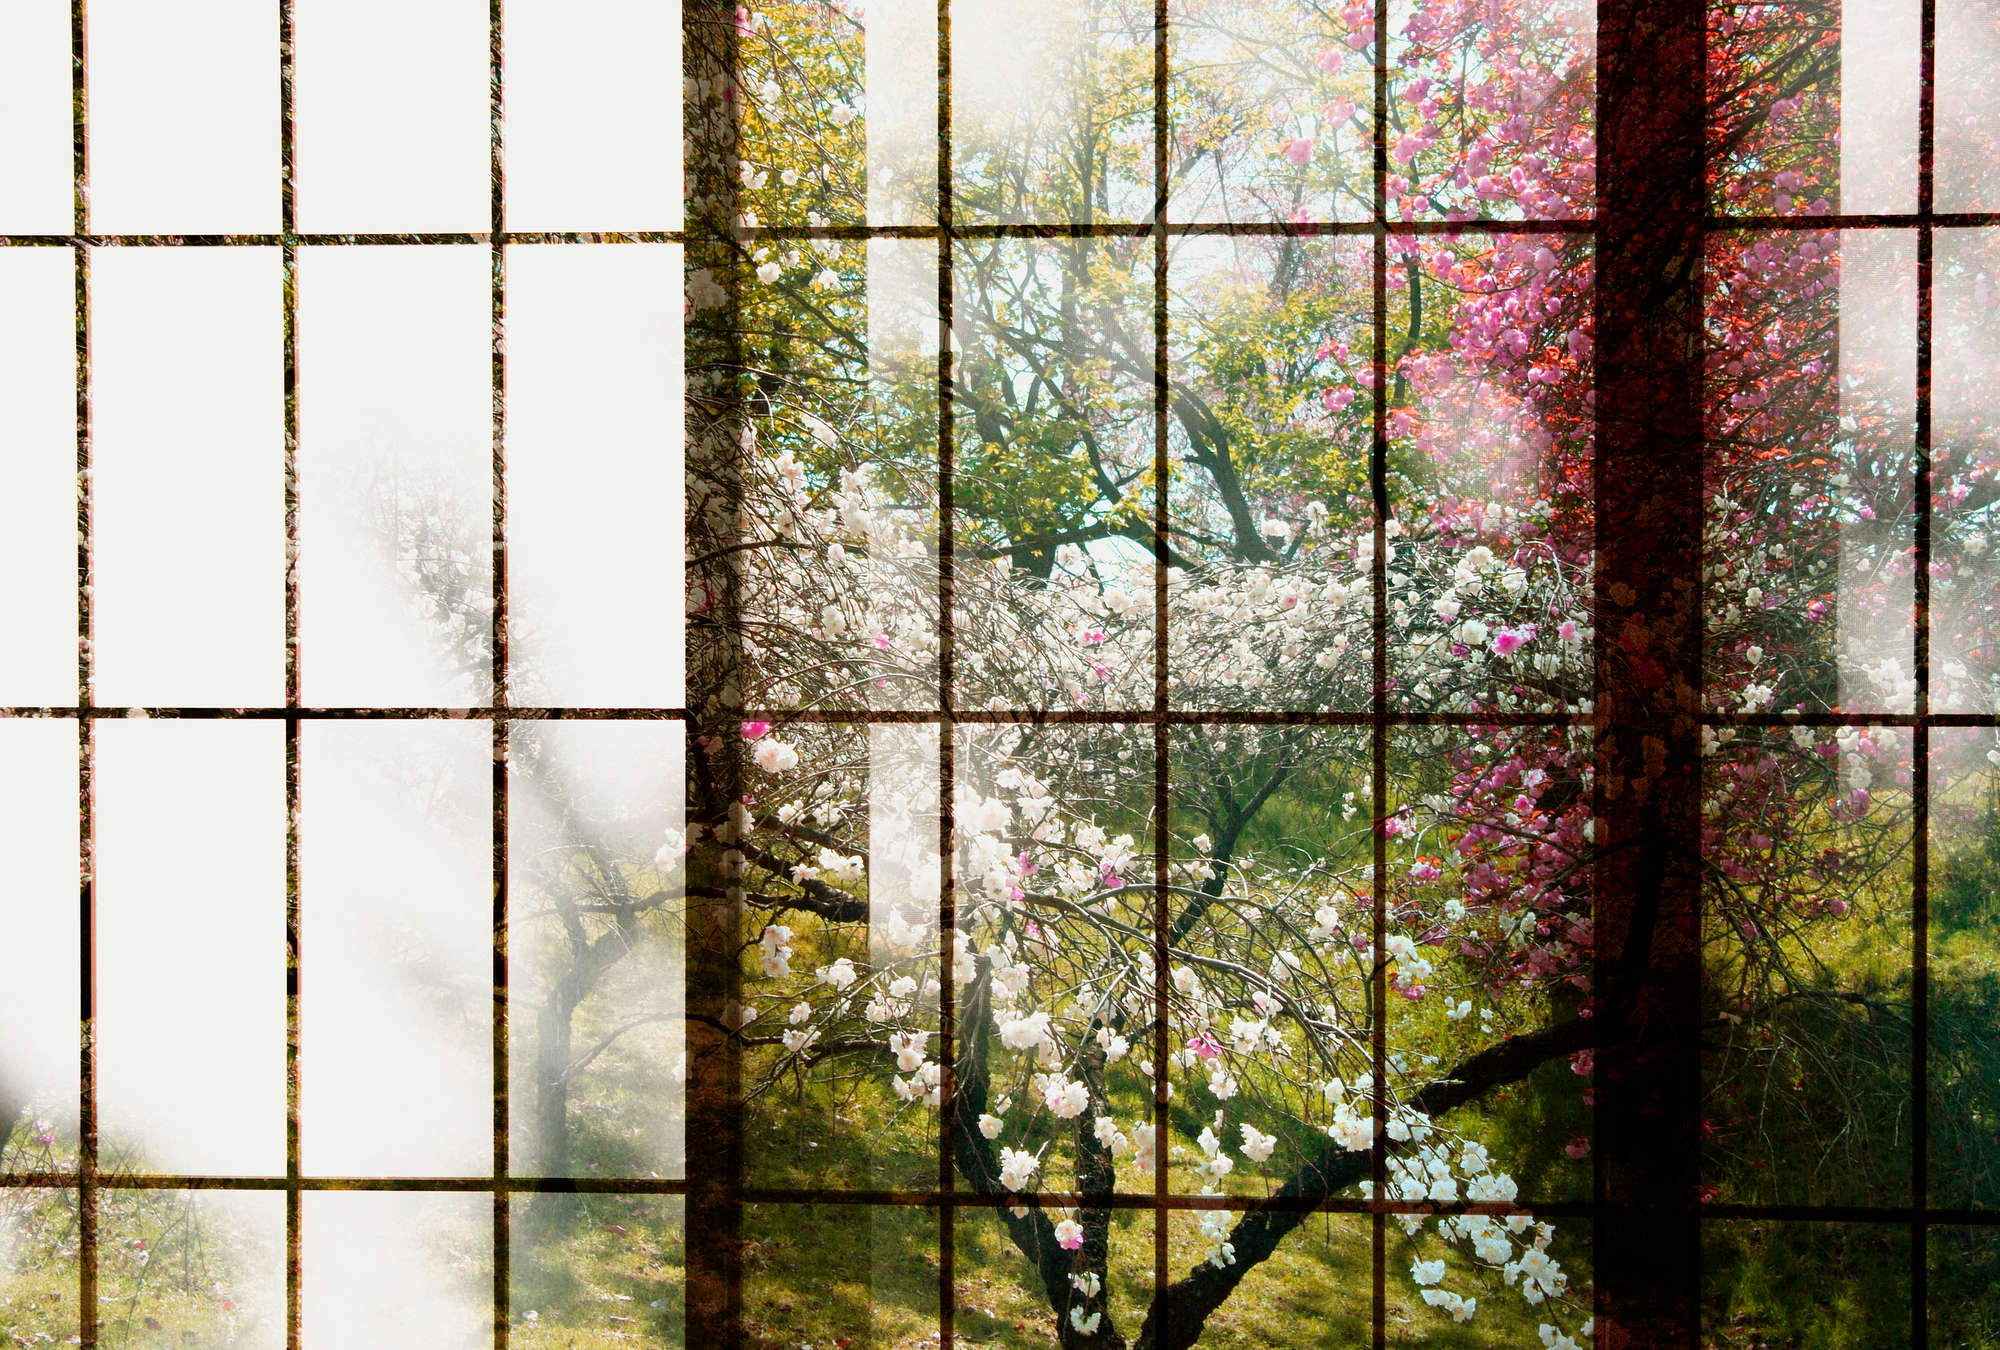             Orchard 1 - Fototapete, Fenster mit Garten Ausblick – Grün, Rosa | Perlmutt Glattvlies
        